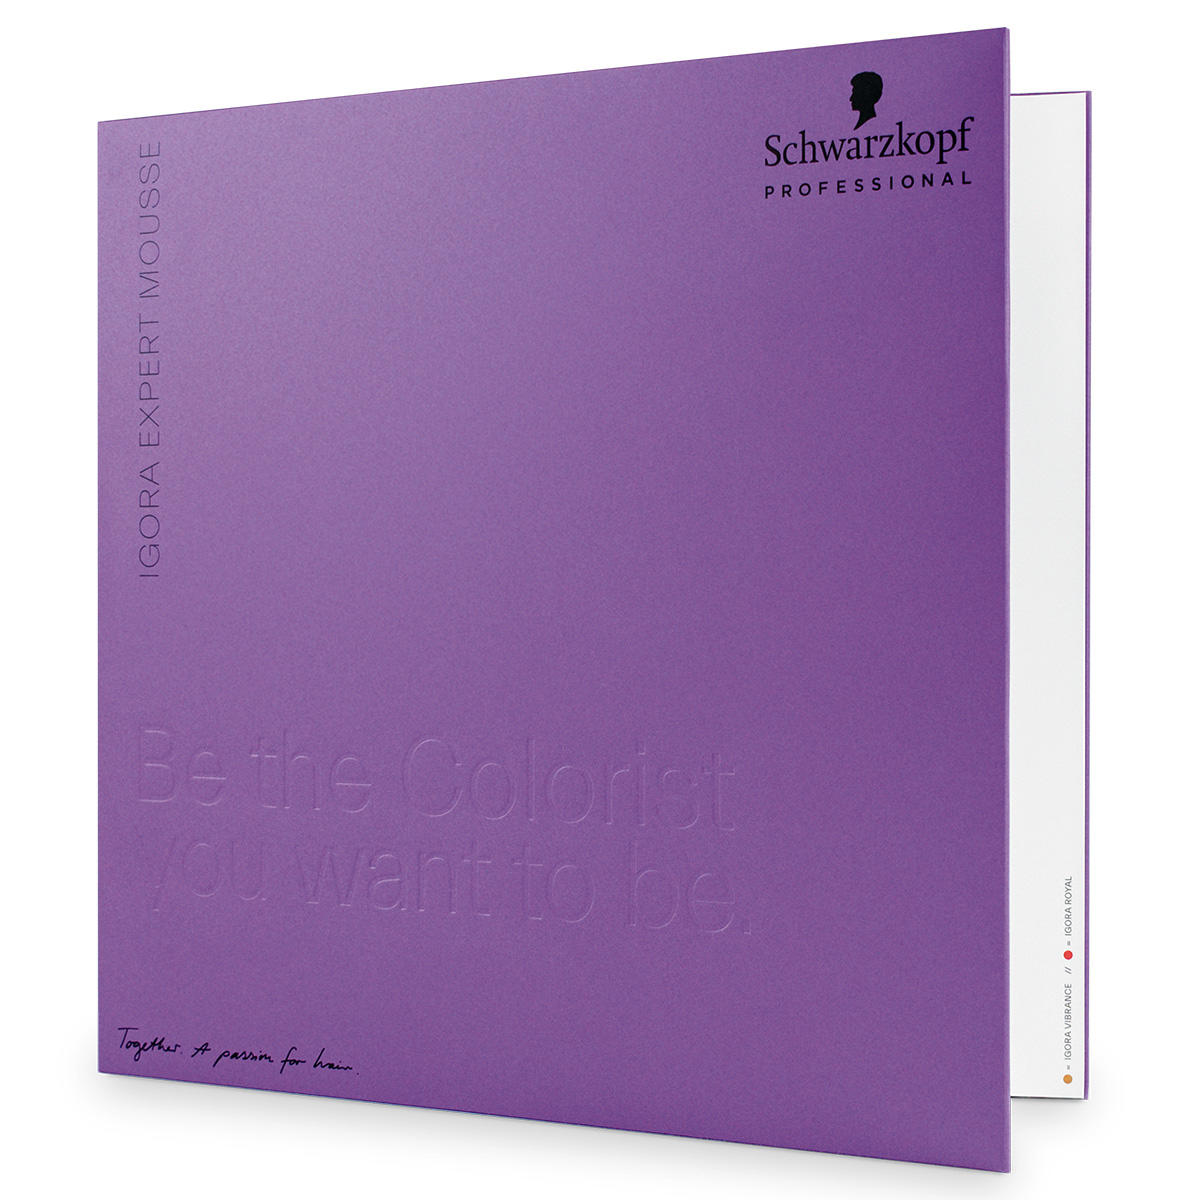 Schwarzkopf Professional IGORA EXPERT MOUSSE charte de couleur  - 1